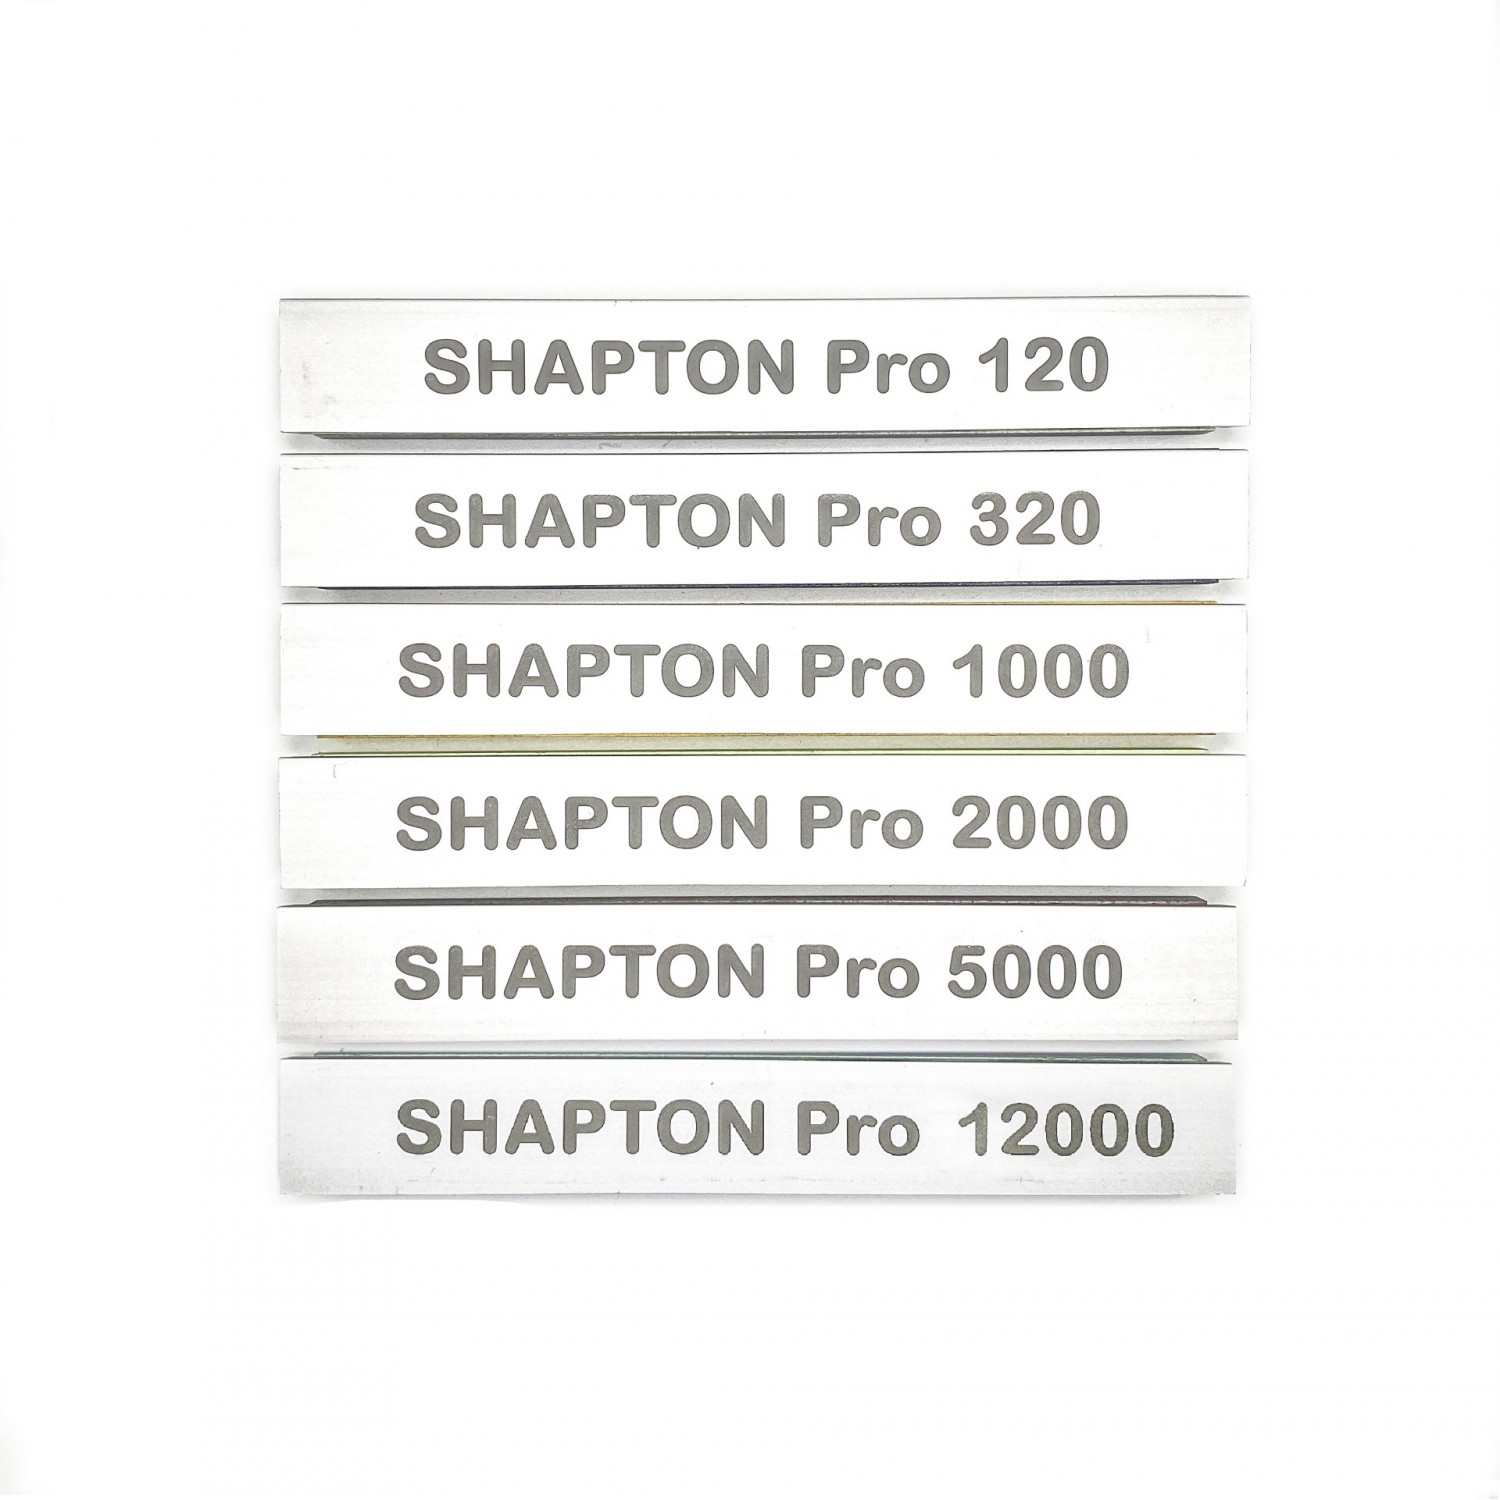 Shapton Pro (Kuromaku) stones recommended set